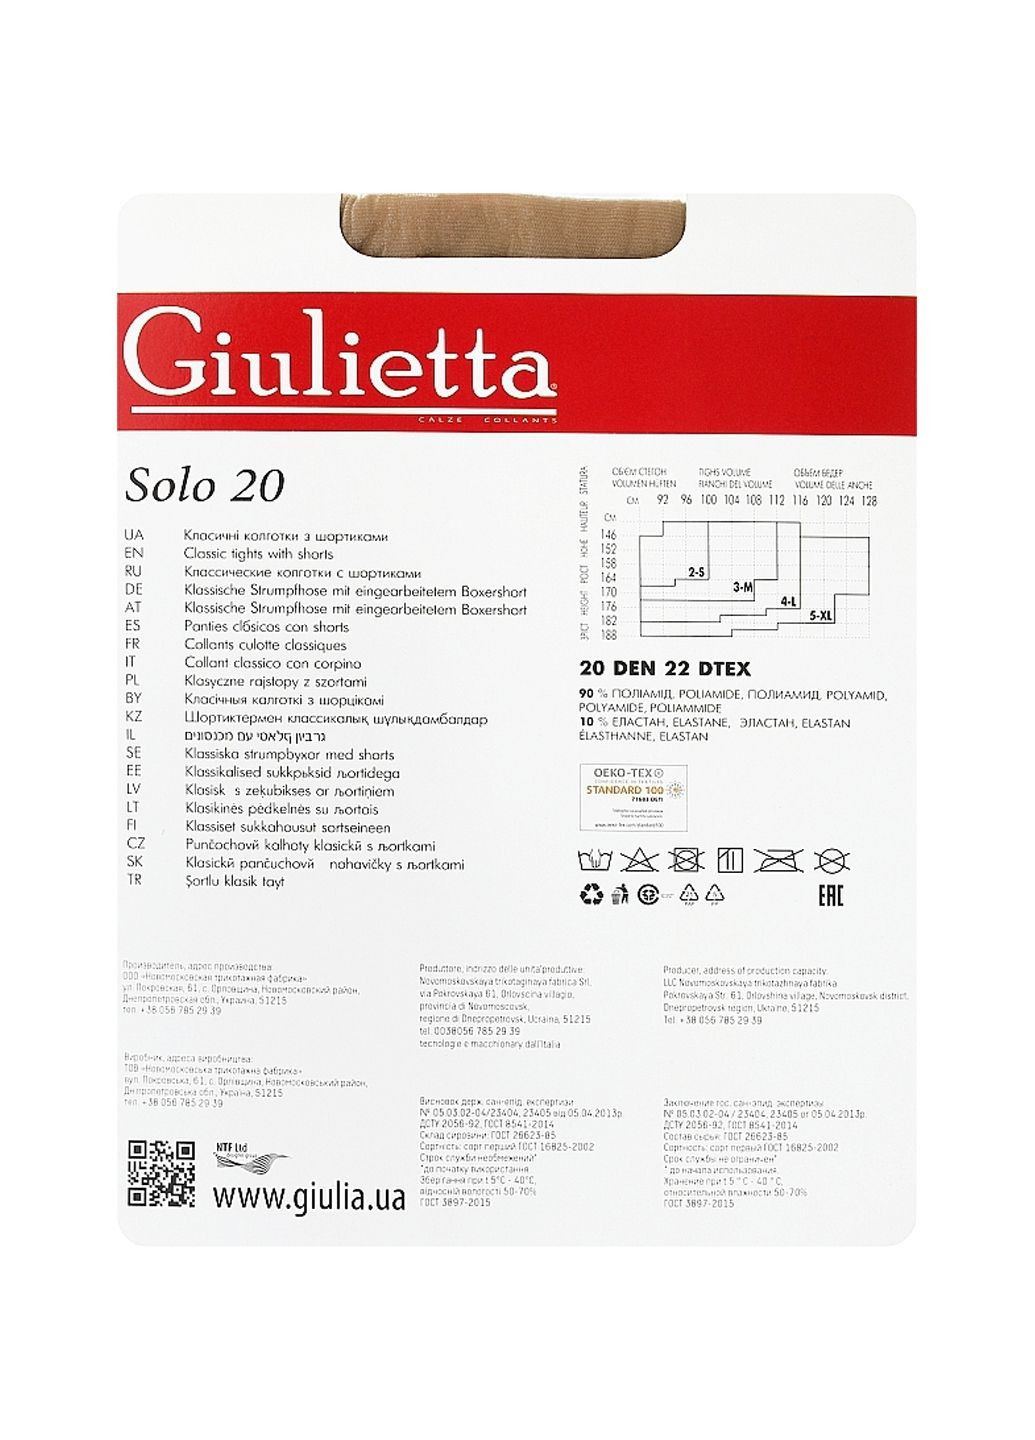 Колготки з шортиками Solo 20 Den (glace-4) Giulietta (289354708)